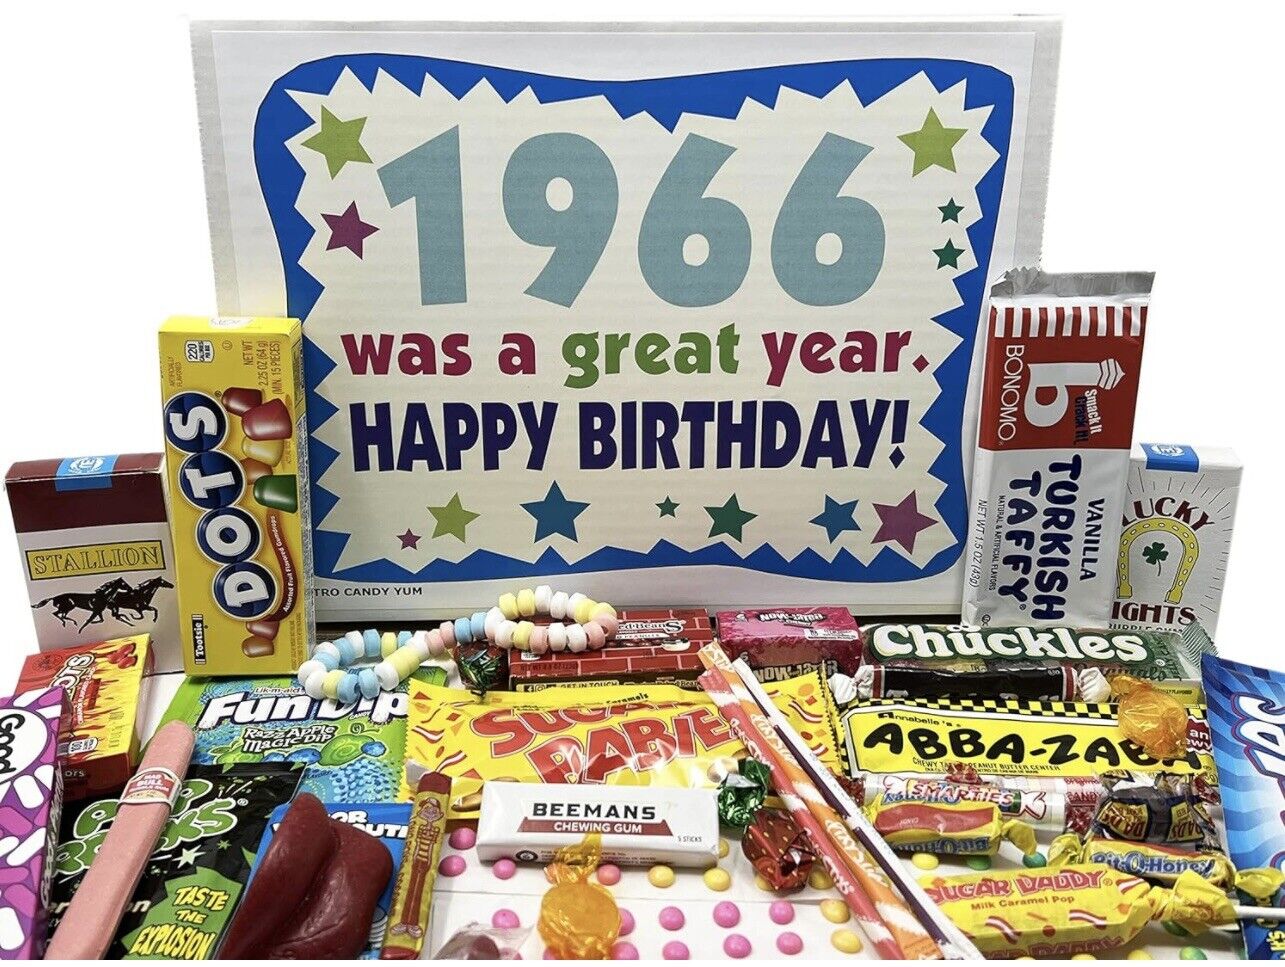 RETRO CANDY YUM ~1966 58th Birthday Gift Box Nostalgic Candy Mix from Childhood